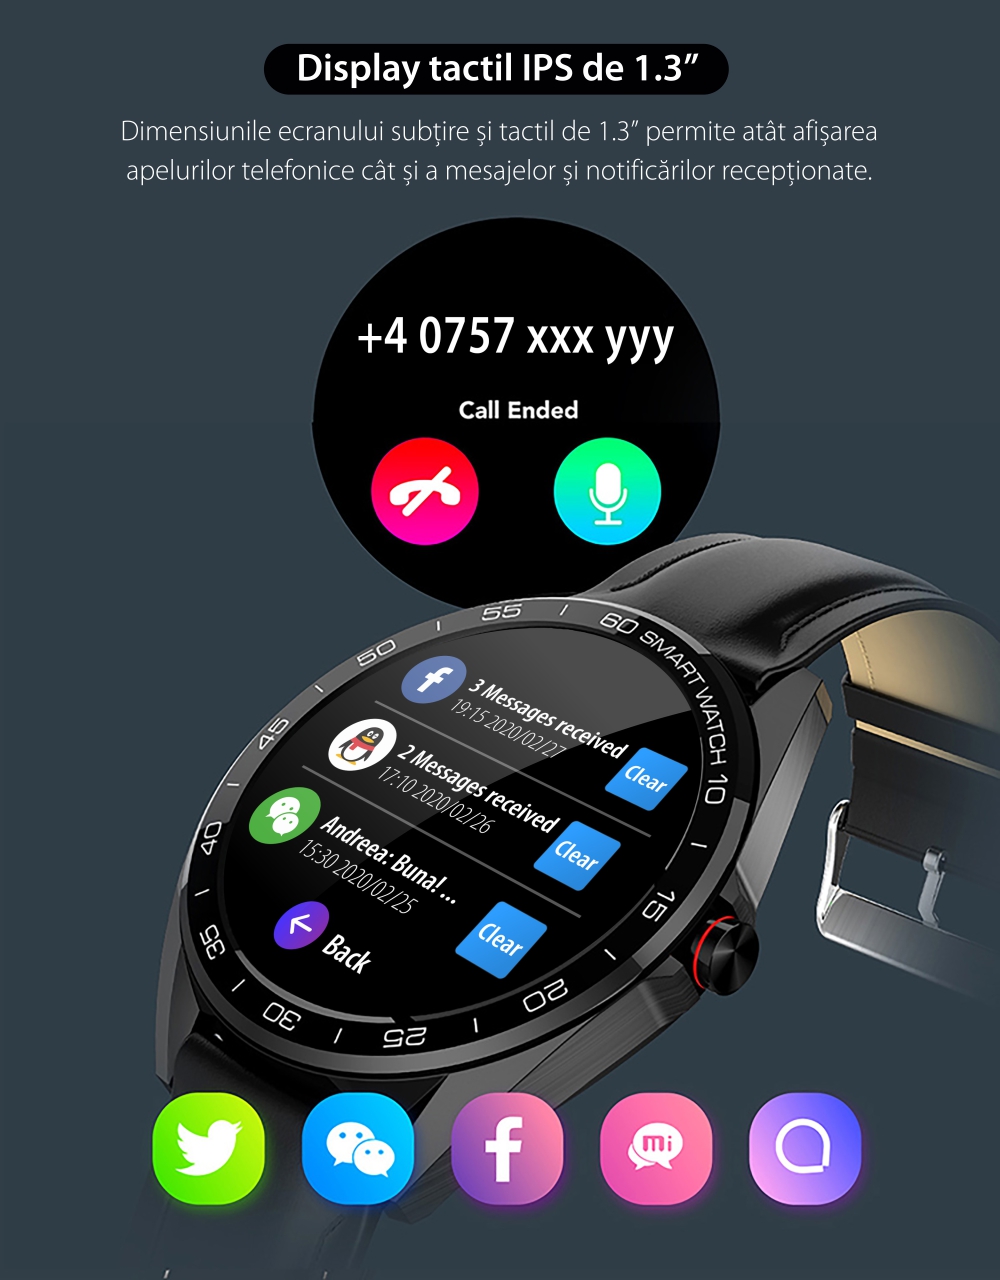 Ceas Smartwatch Twinkler TKY-K7 cu functie de monitorizare ritm cardiac, Tensiune arteriala, Distanta parcursa, Notificari Apel/ SMS, Bluetooth, Maro